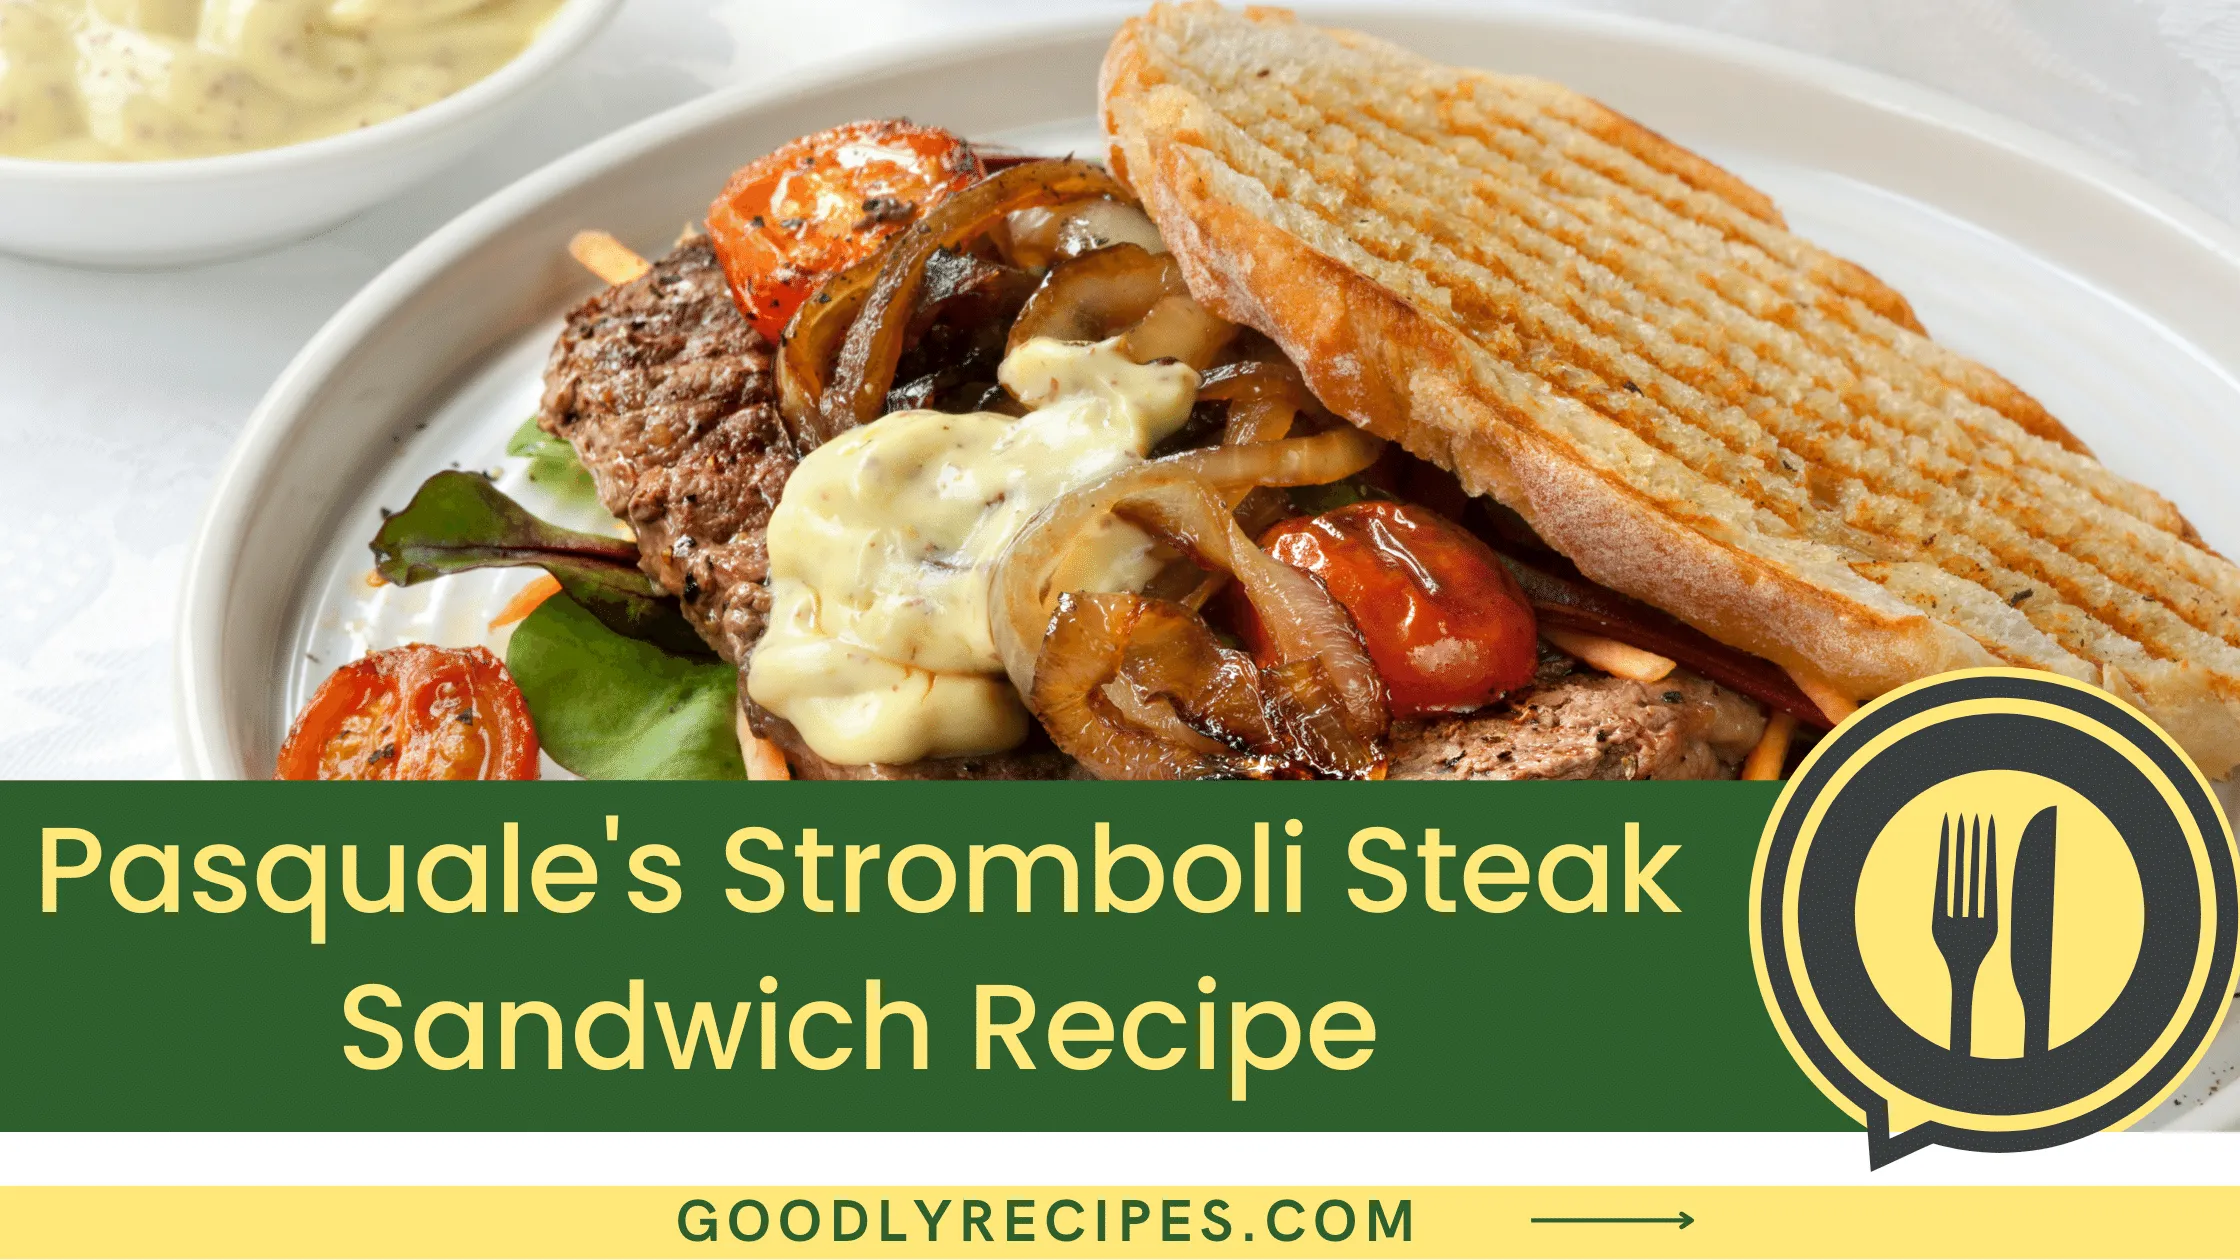 What is Pasquale’s Stromboli Steak Sandwich?